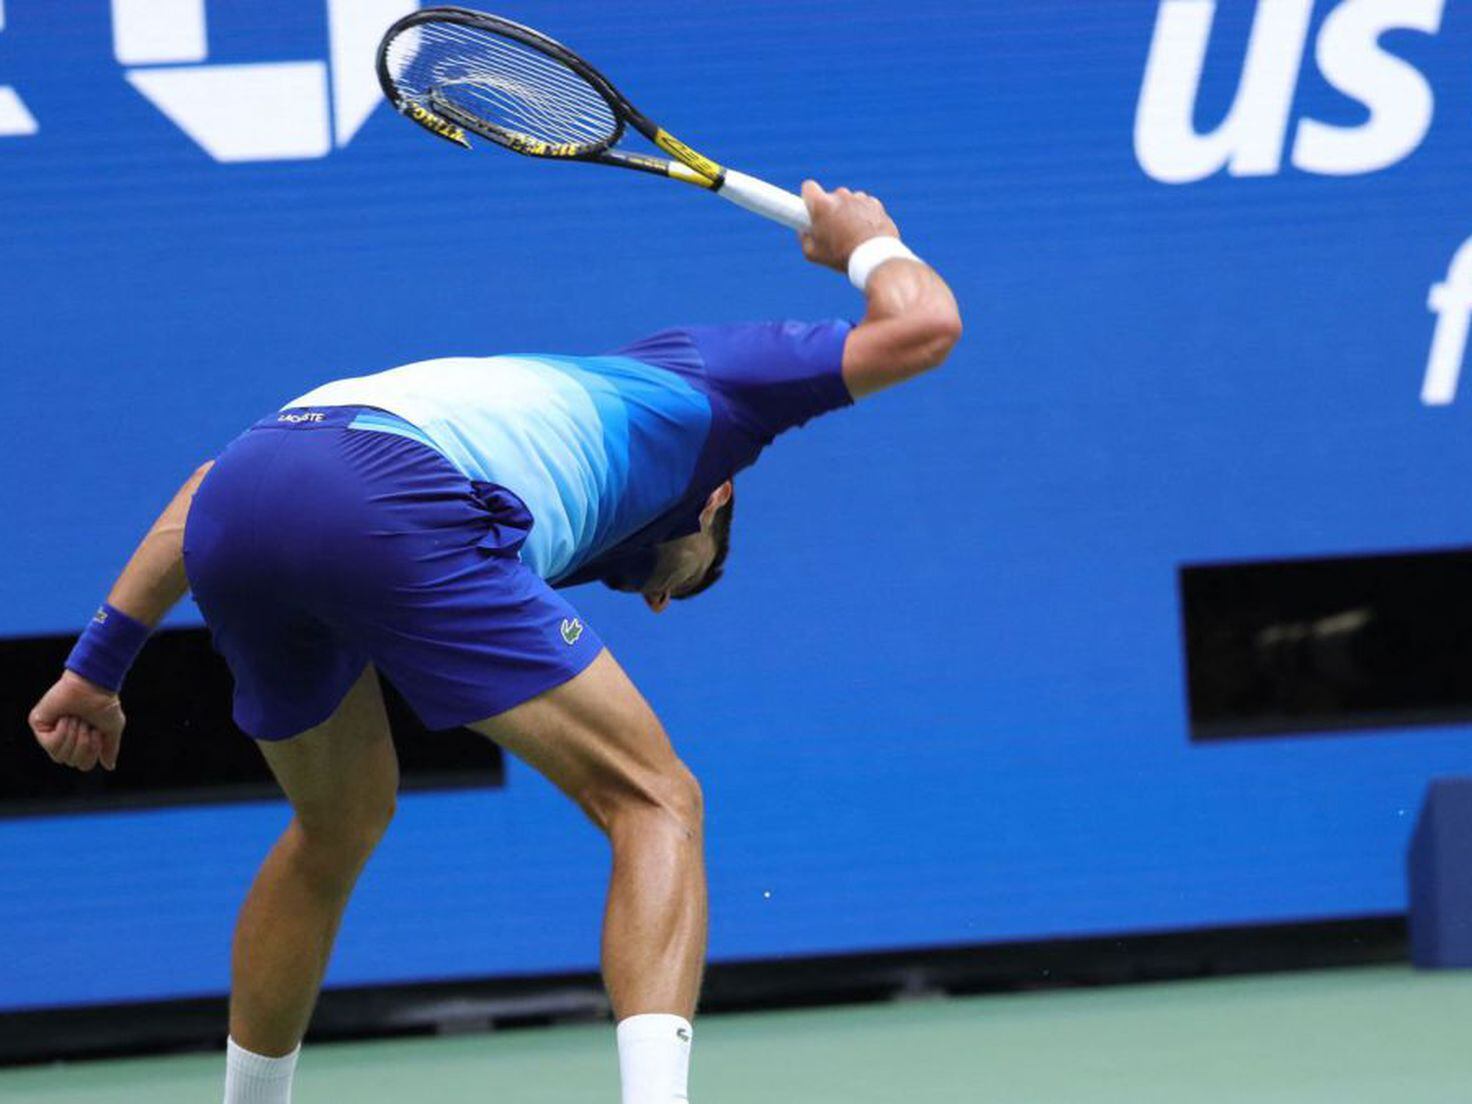 Tênis: Djokovic vence boliviano e avança no individual masculino